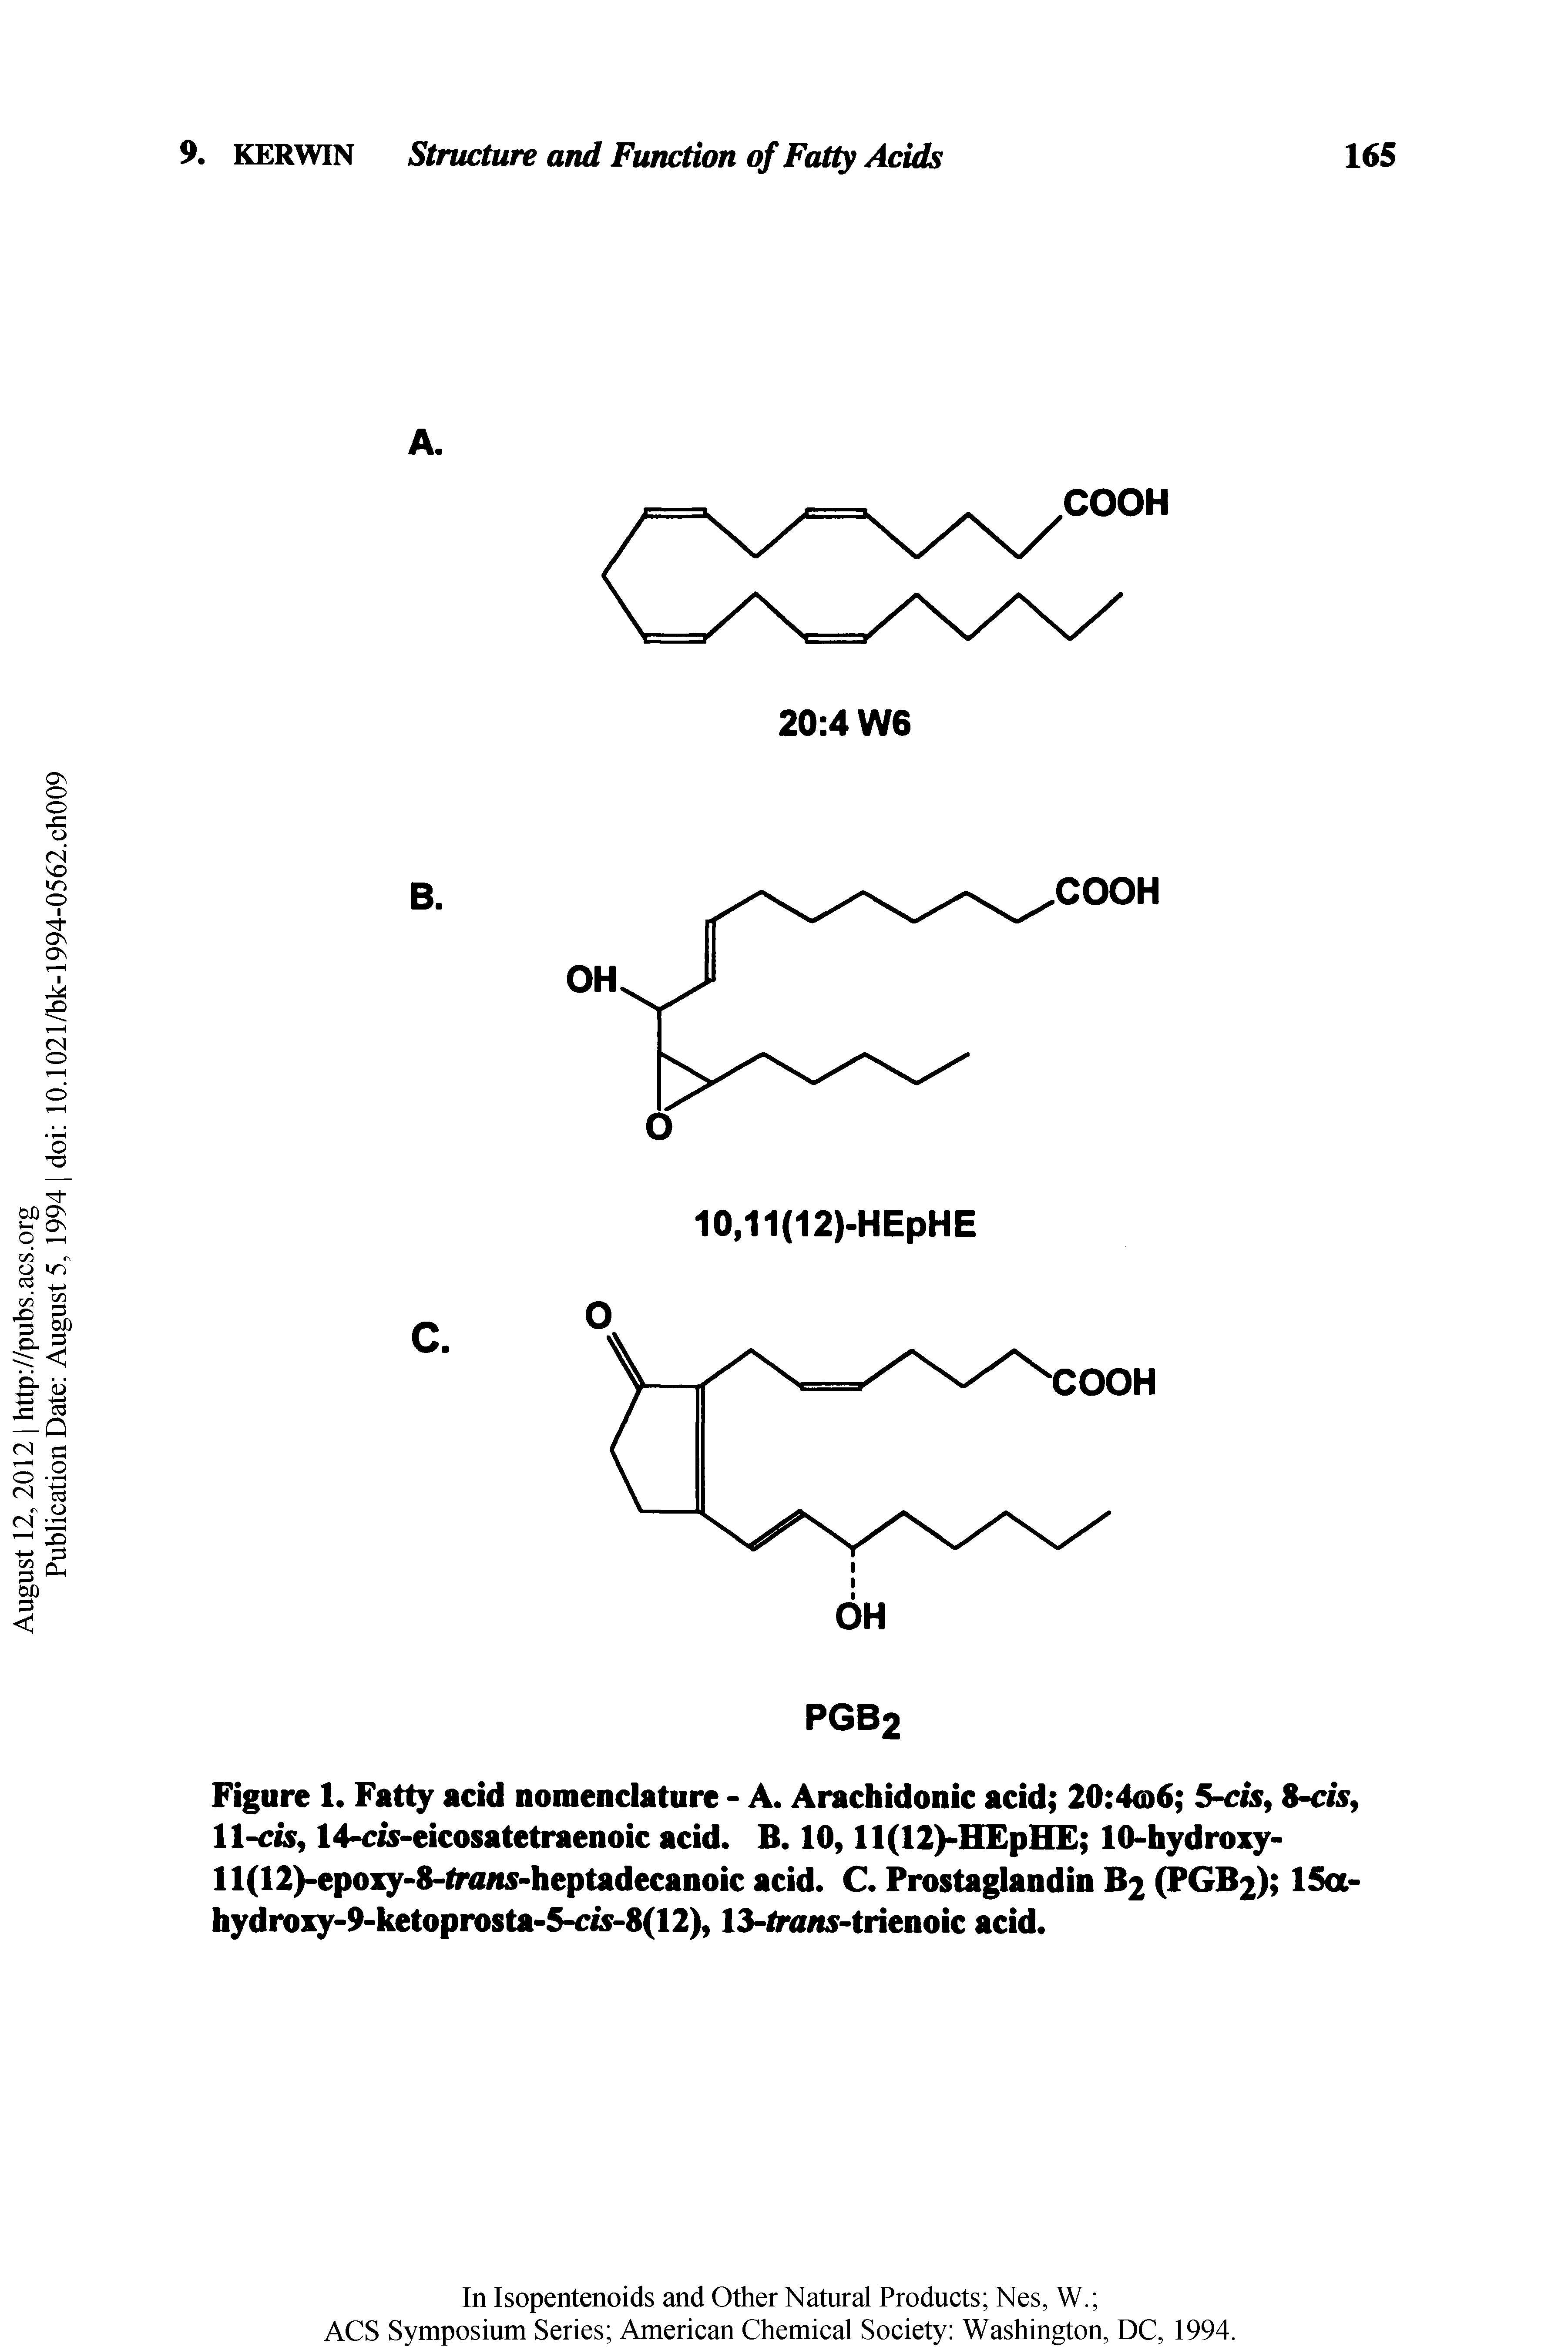 Figure 1. Fatty acid nomenclature - A. Arachidonic acid 20 4a>6 5-c, 8-c , 11-cis, 14-c -eicosatetraenoic acid. B. 10, ll(12)-H pH 10-hydroxy-ll(12)-epoxy-8-lriiifs-heptadecanoic acid. C. Prostaglandin B2 (PGB2) 15a-hydroxy-9-ketoprosta-5 tf-8(12), 13-lra t5-trienoic acid.